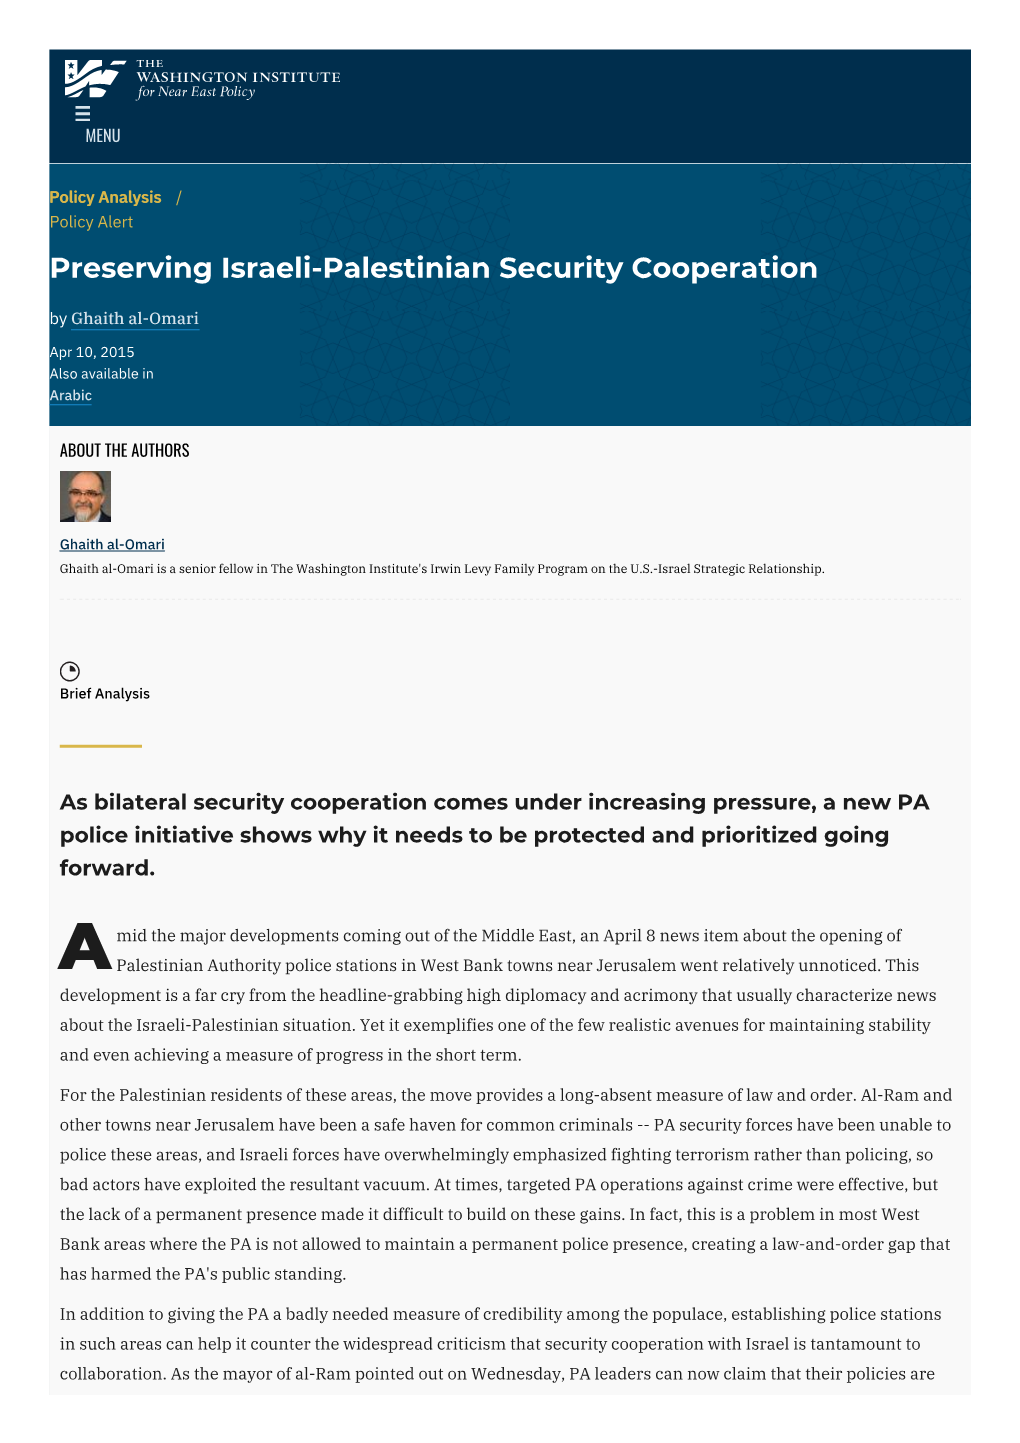 Preserving Israeli-Palestinian Security Cooperation by Ghaith Al-Omari